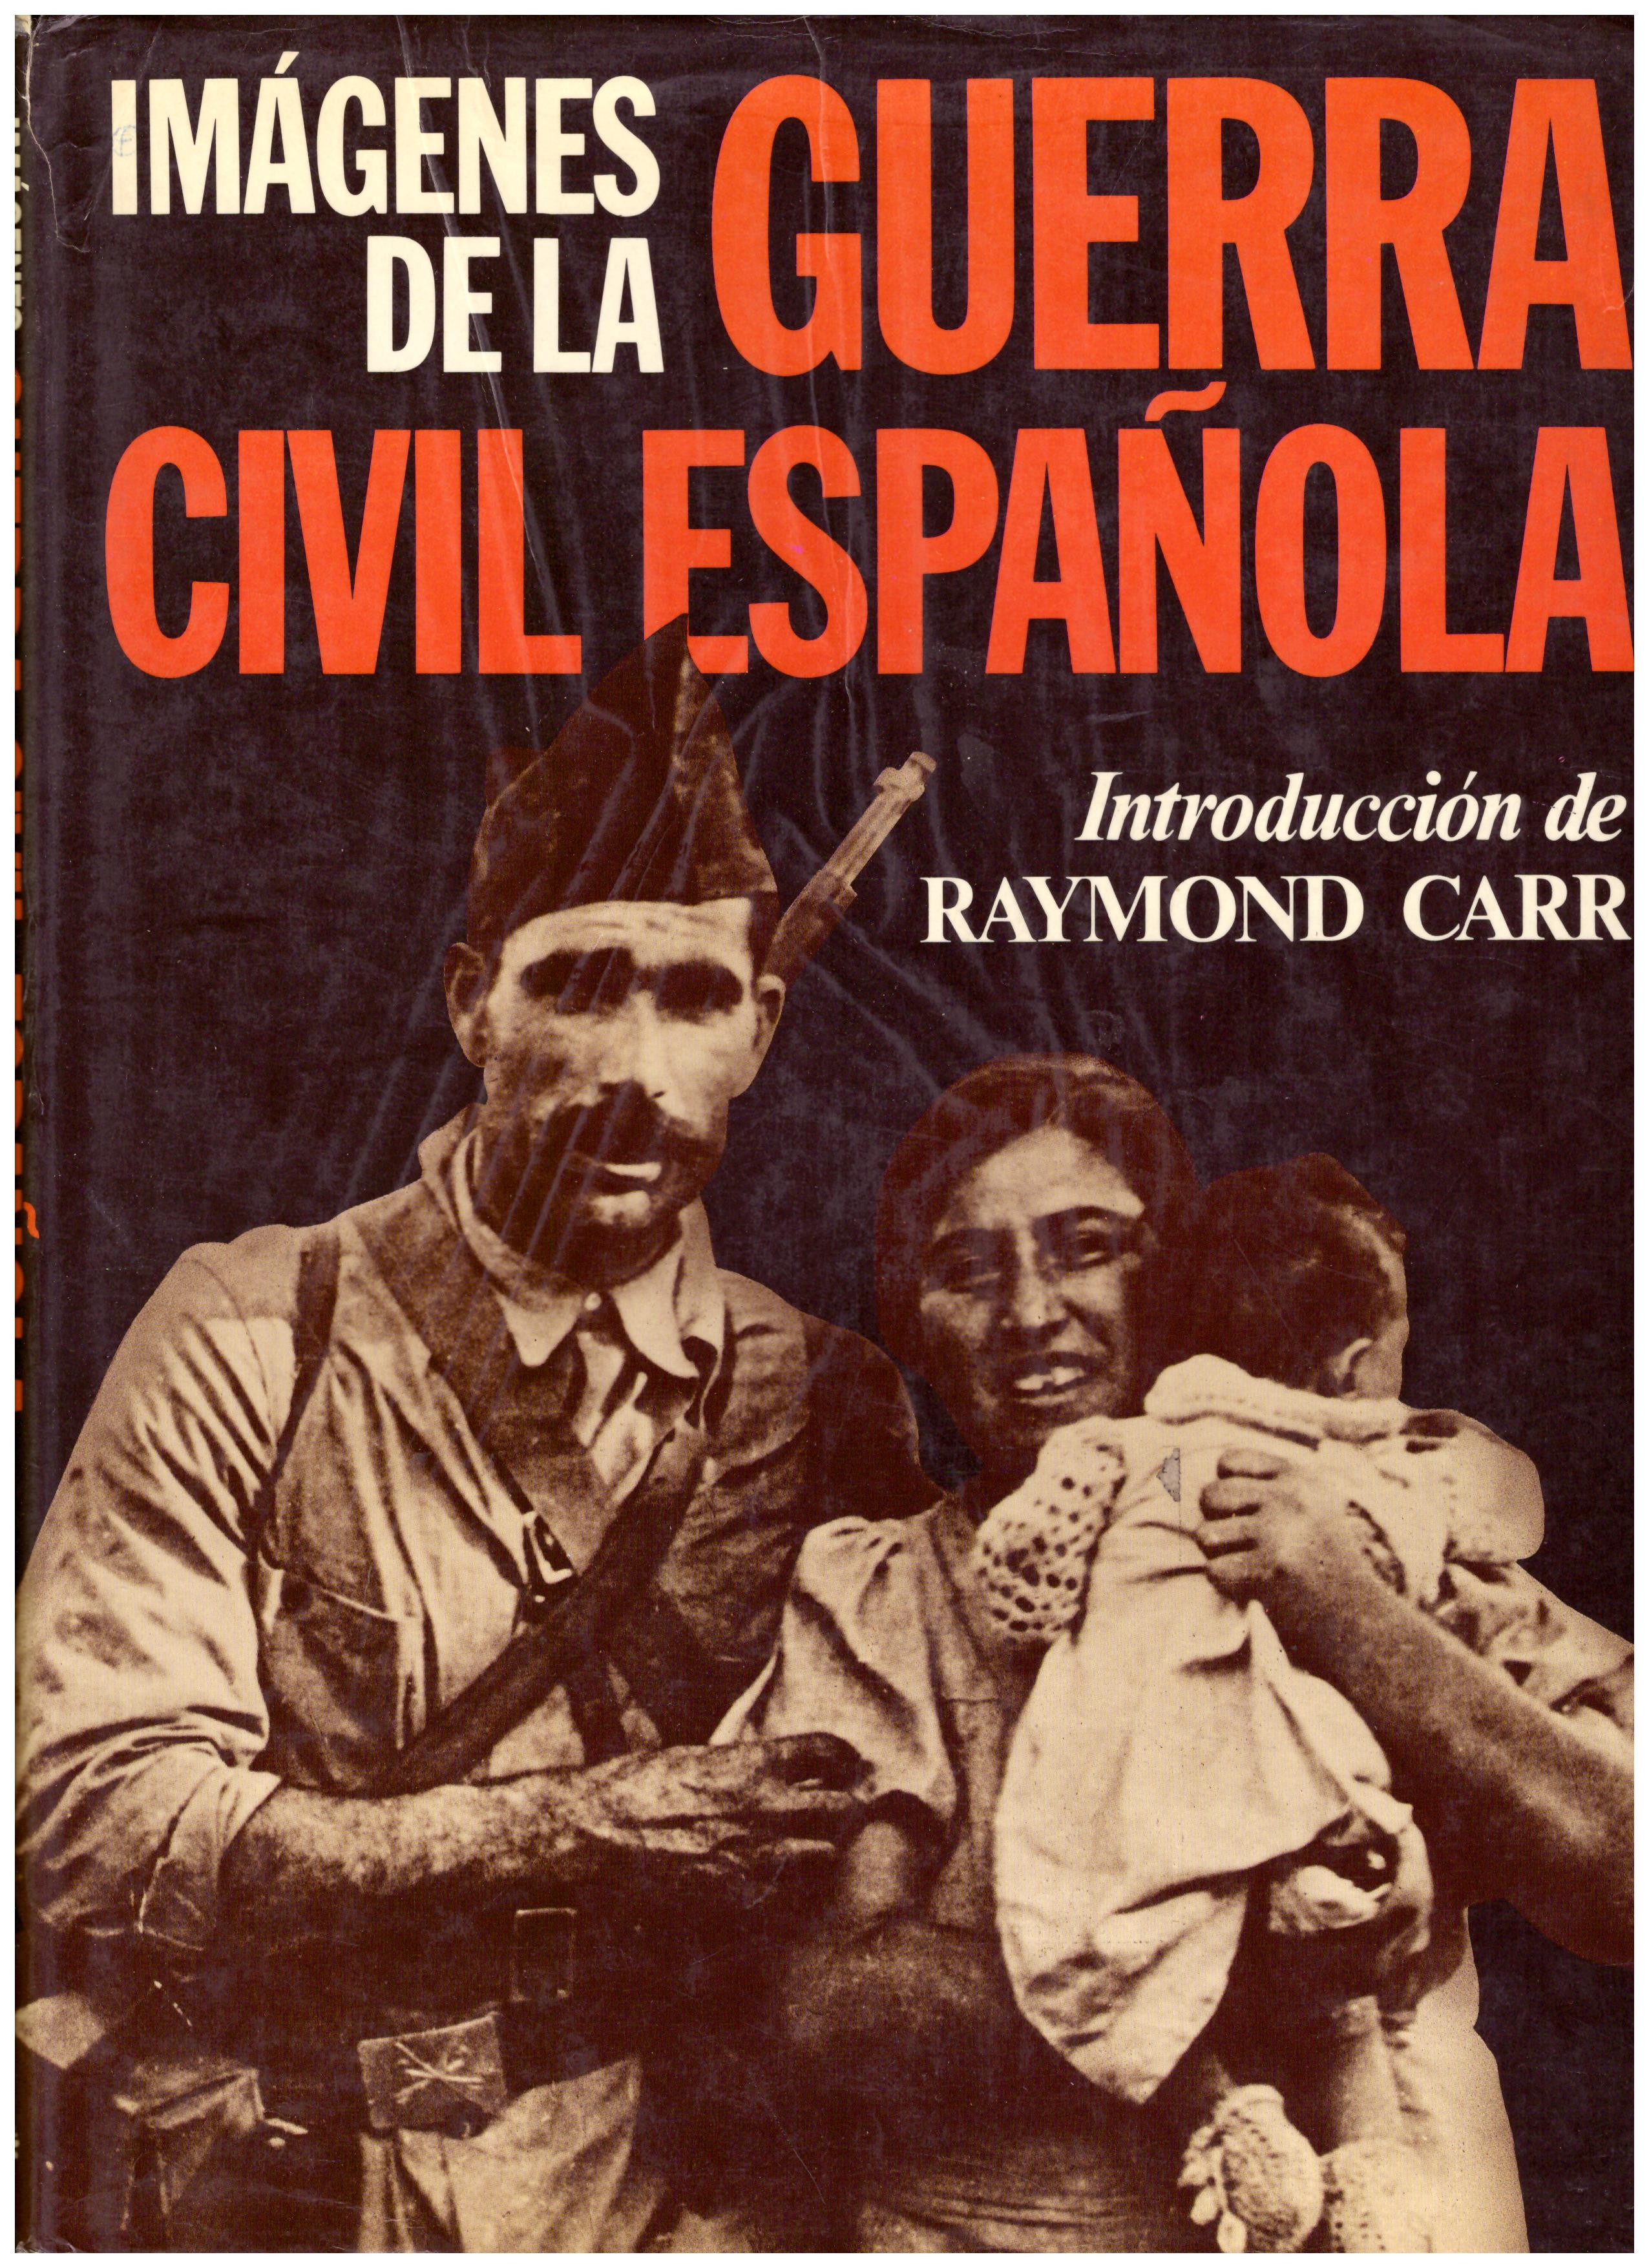 Images de la guerra civil espanola